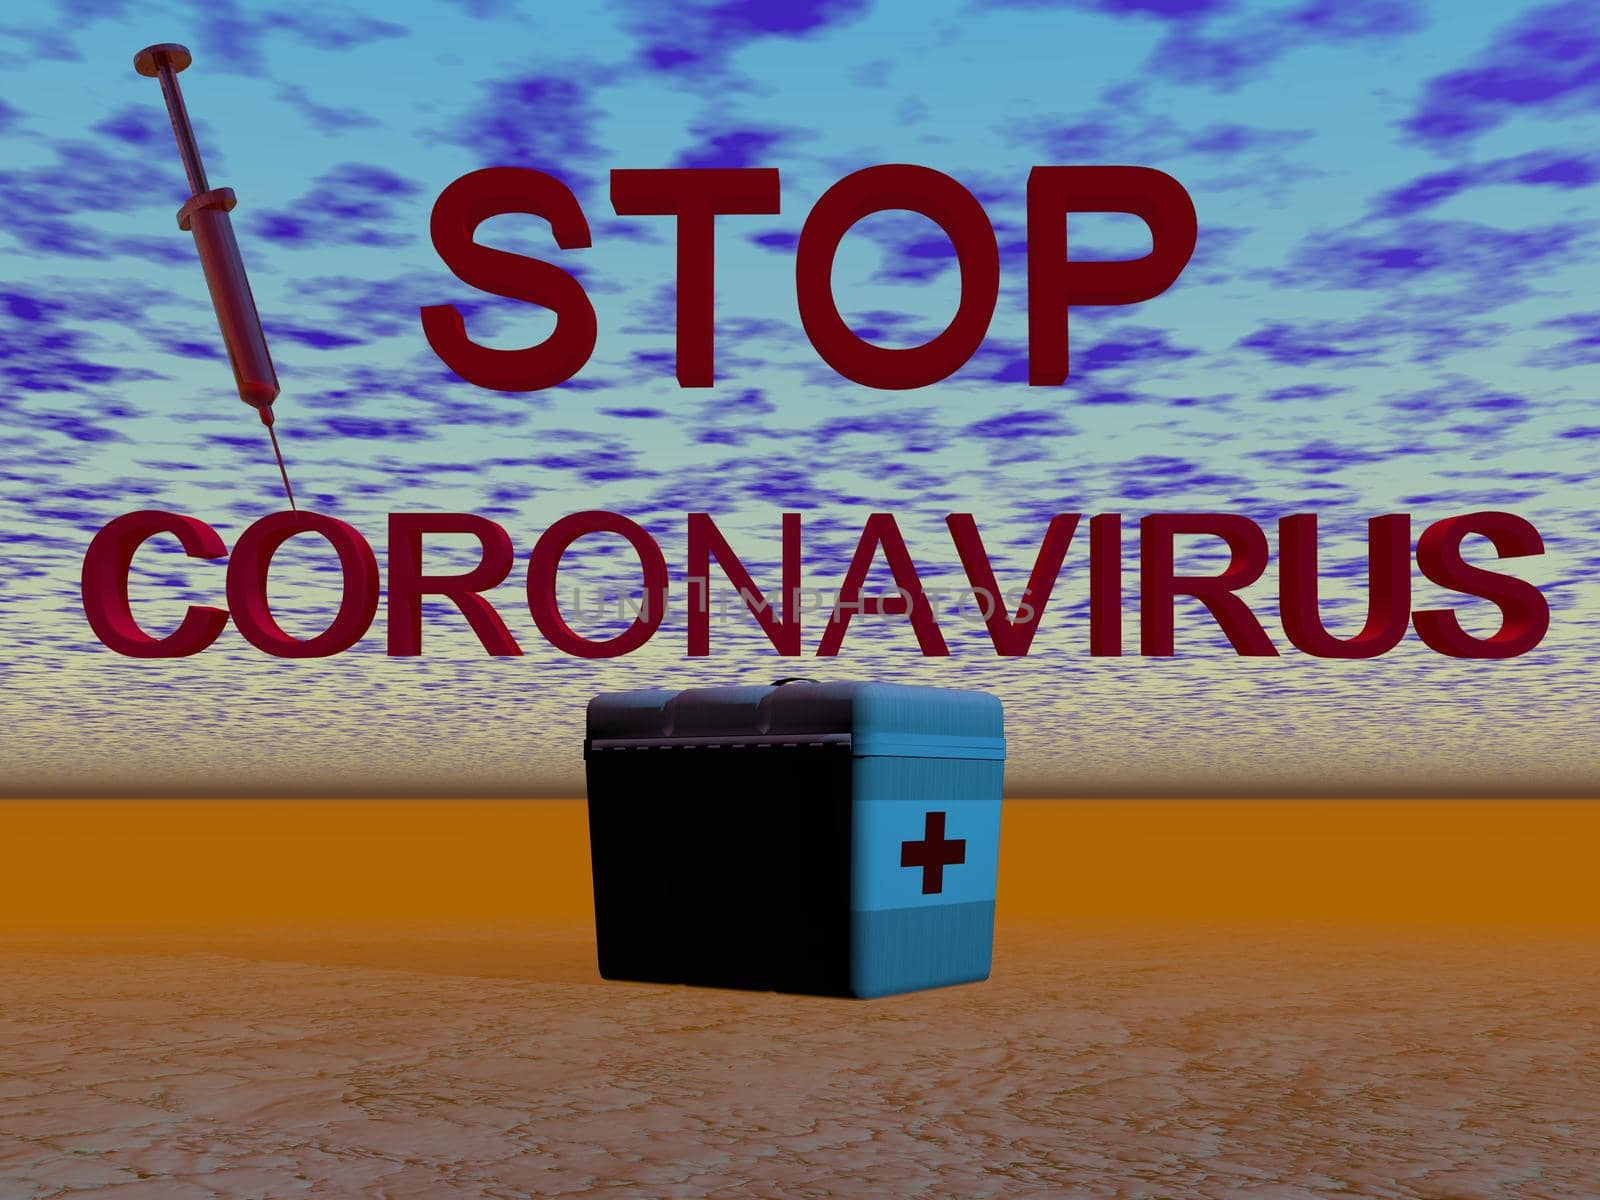 stop coronavirus and sky clouds - 3d rendering